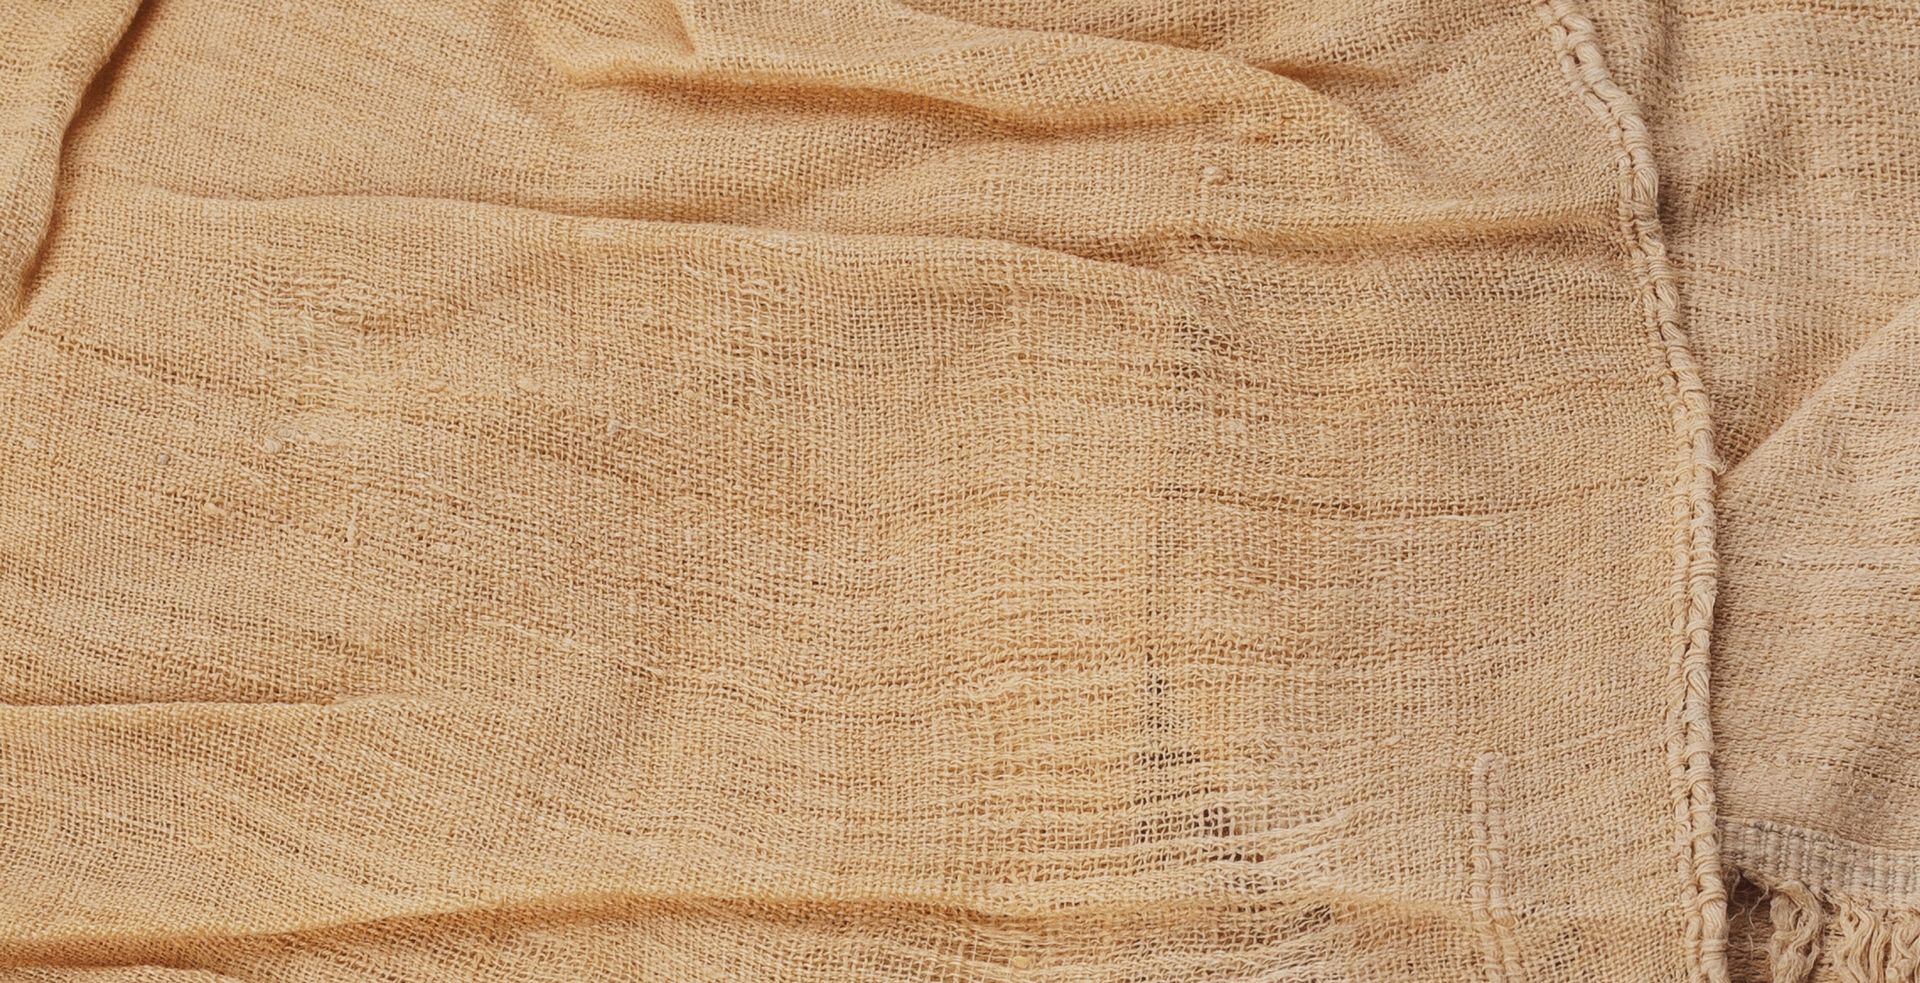 Close-up detail of a sheet of tan linen cloth